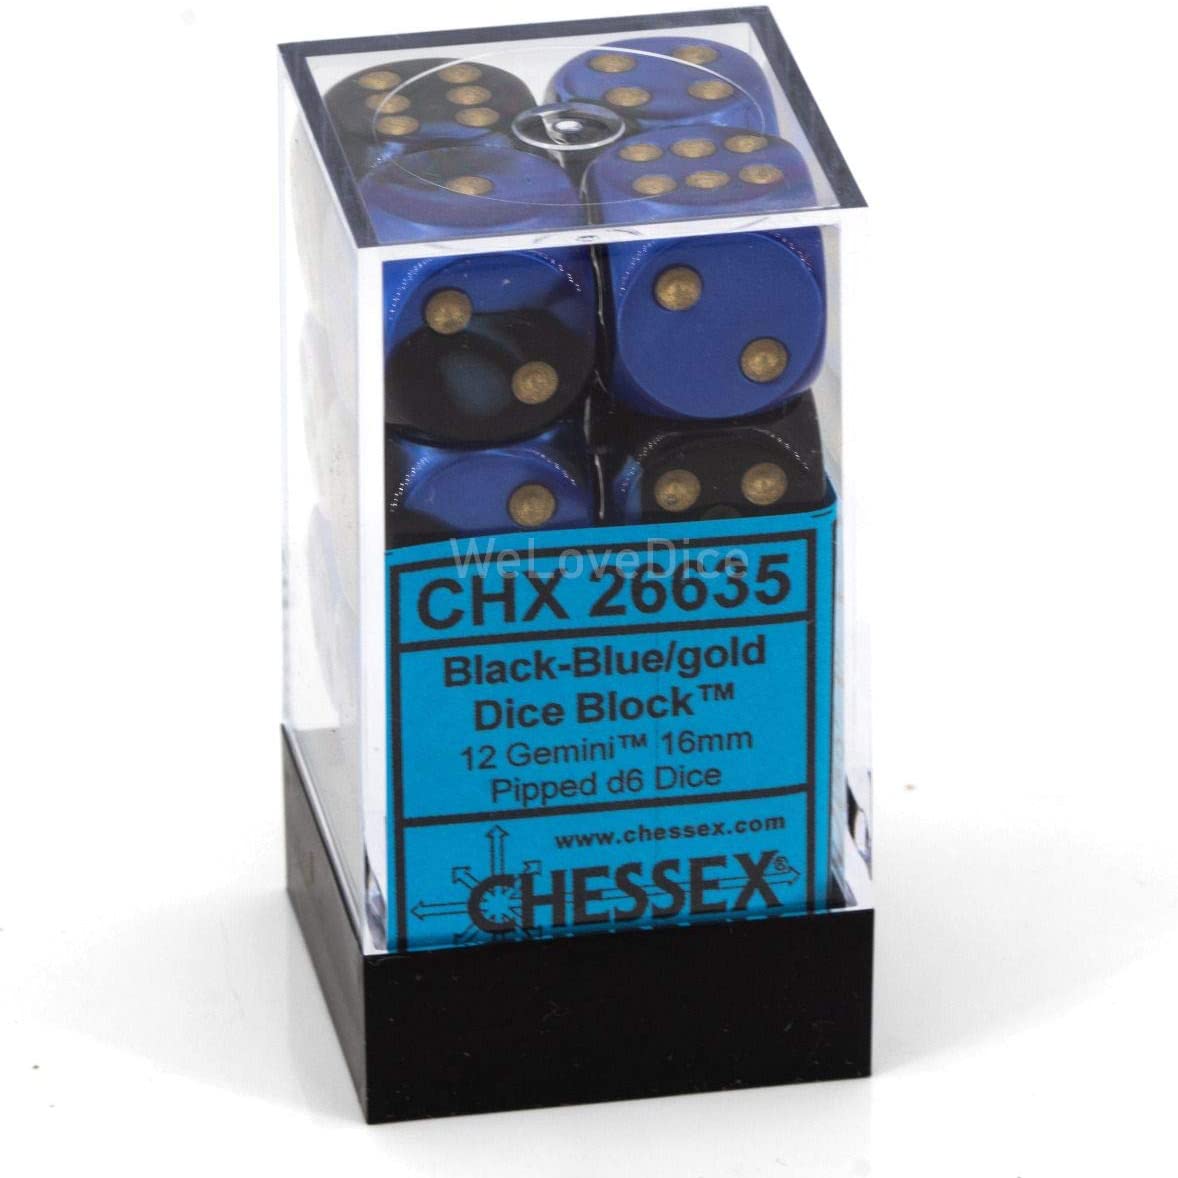 Chessex Dice: D6 Block 16mm - Gemini - Black-Blue with Gold (CHX 26635) - Gamescape